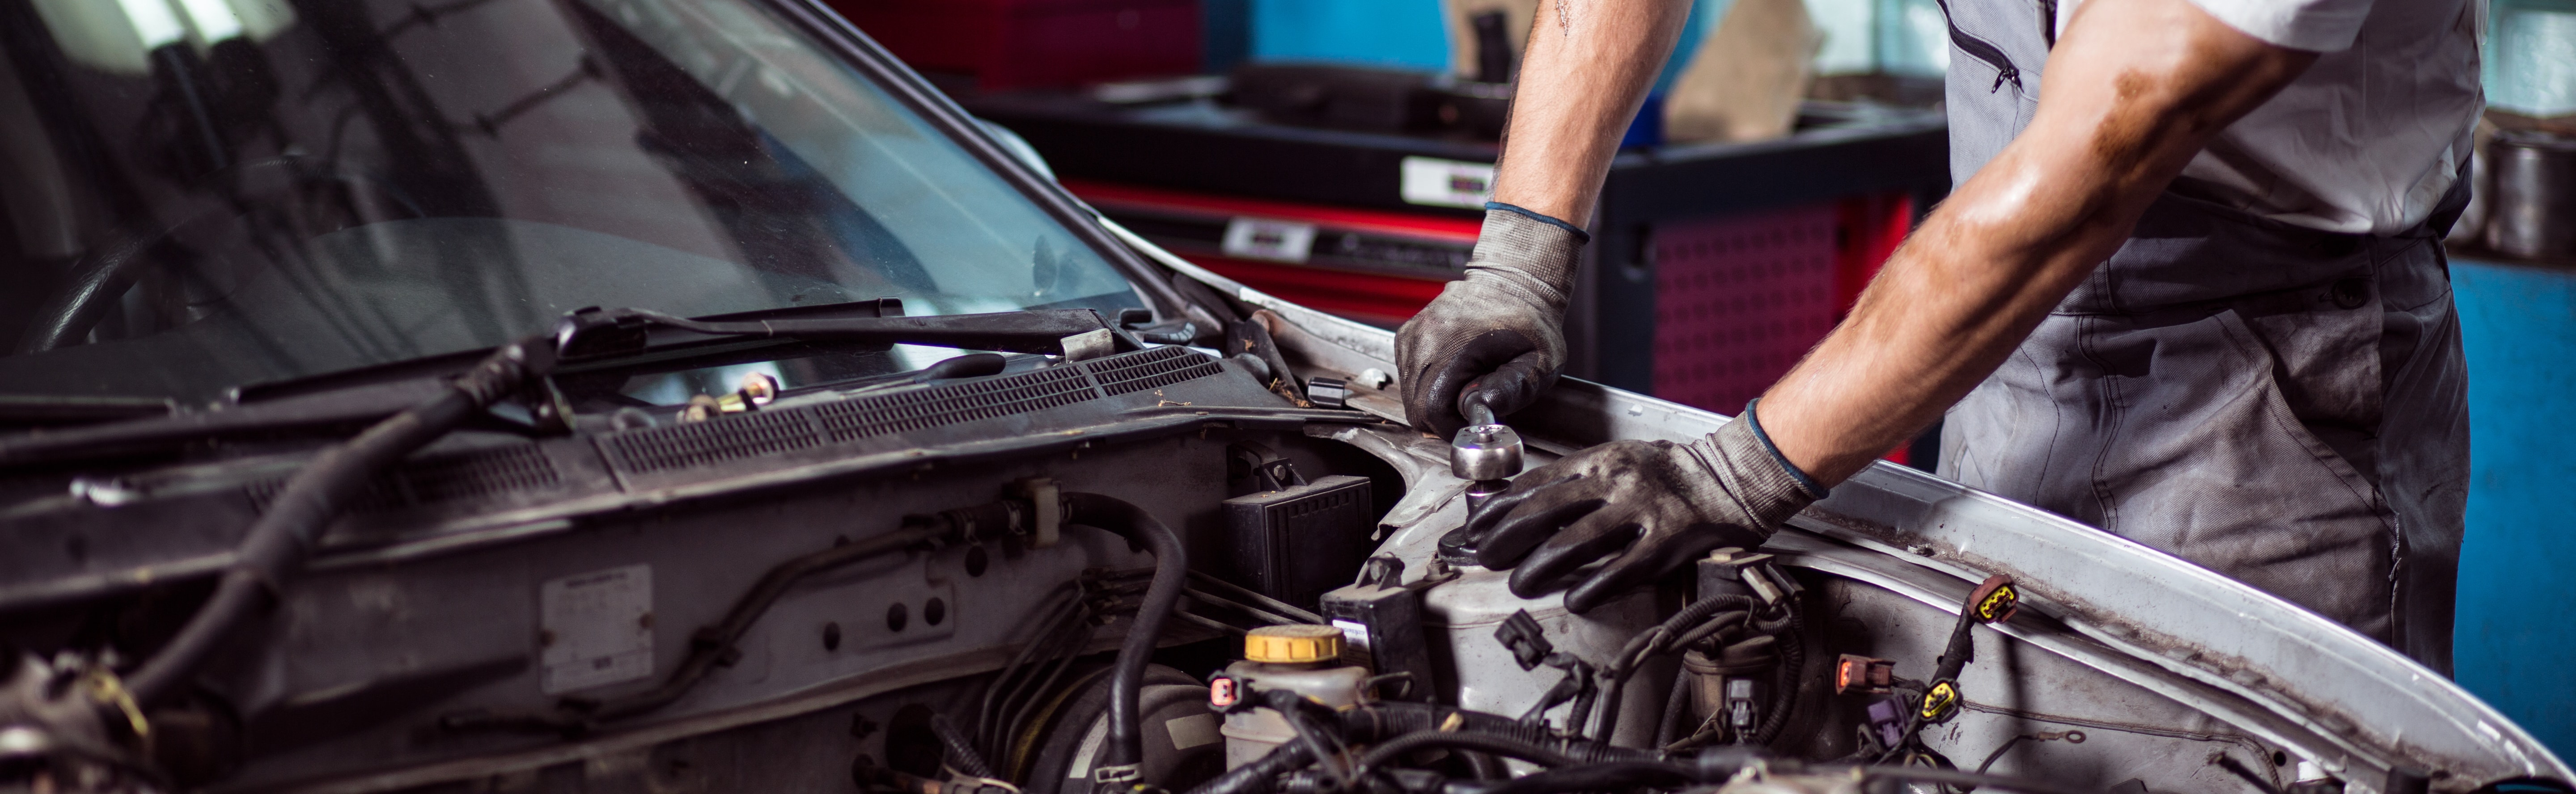 Top 5 Occupational Hazards In Your Auto Shop Keeping Mechanics